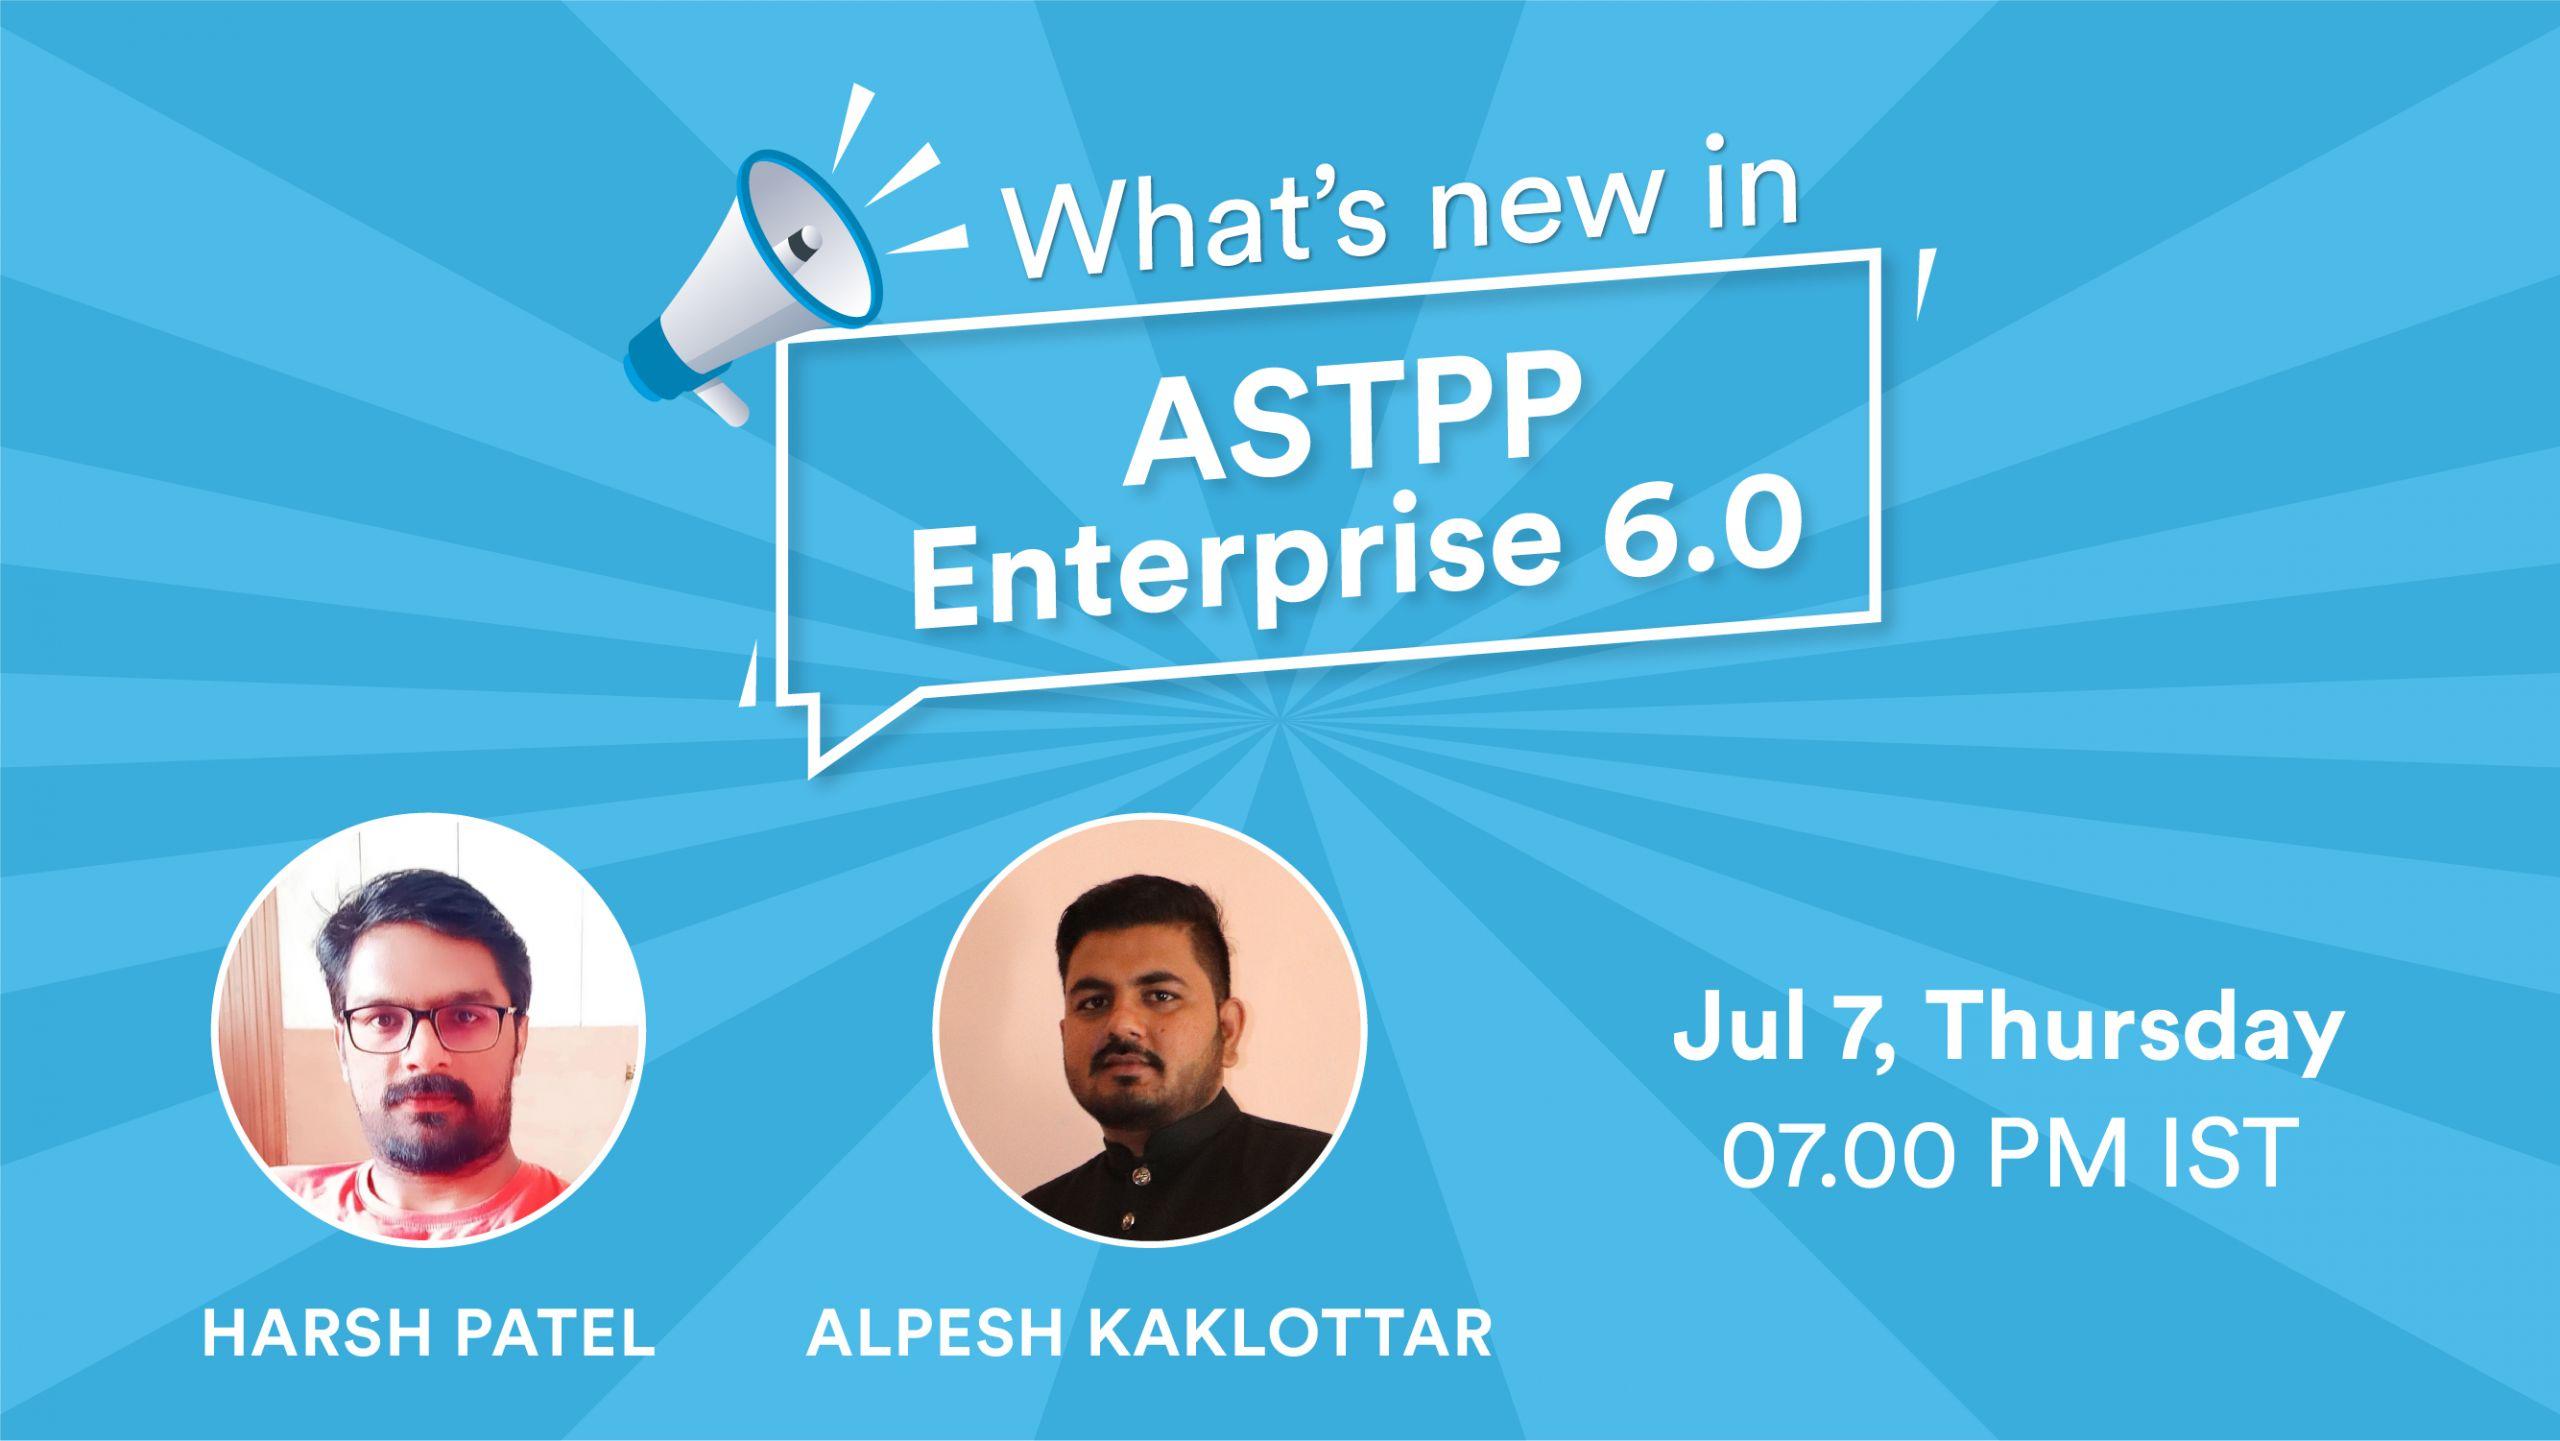 ASTPP Enterprise 6.0